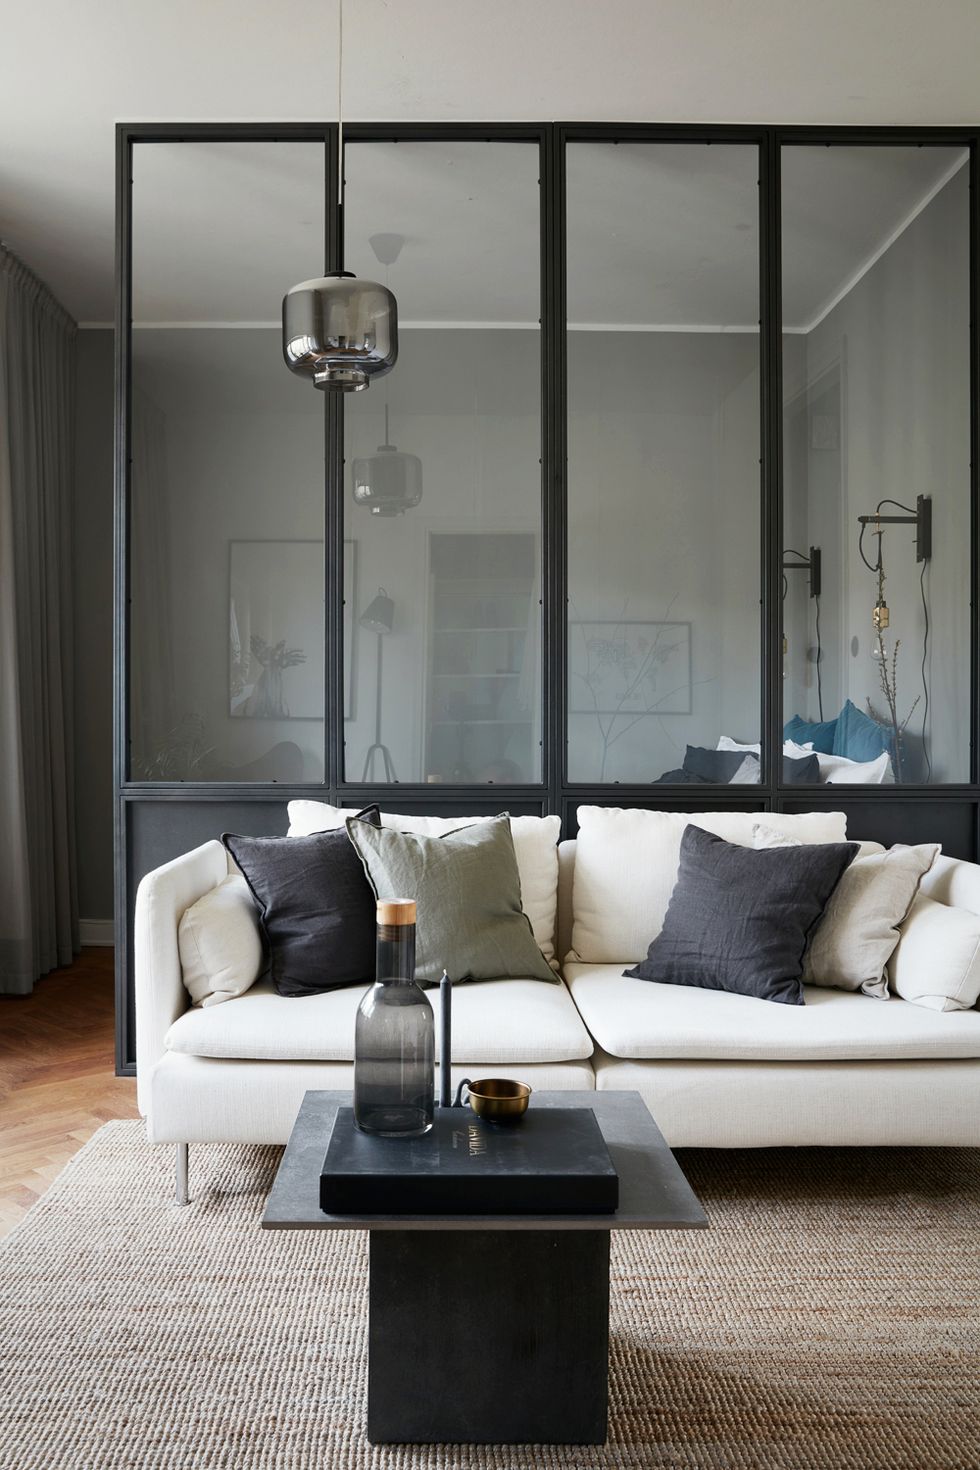 20 Studio Apartment Design Ideas You'll Love